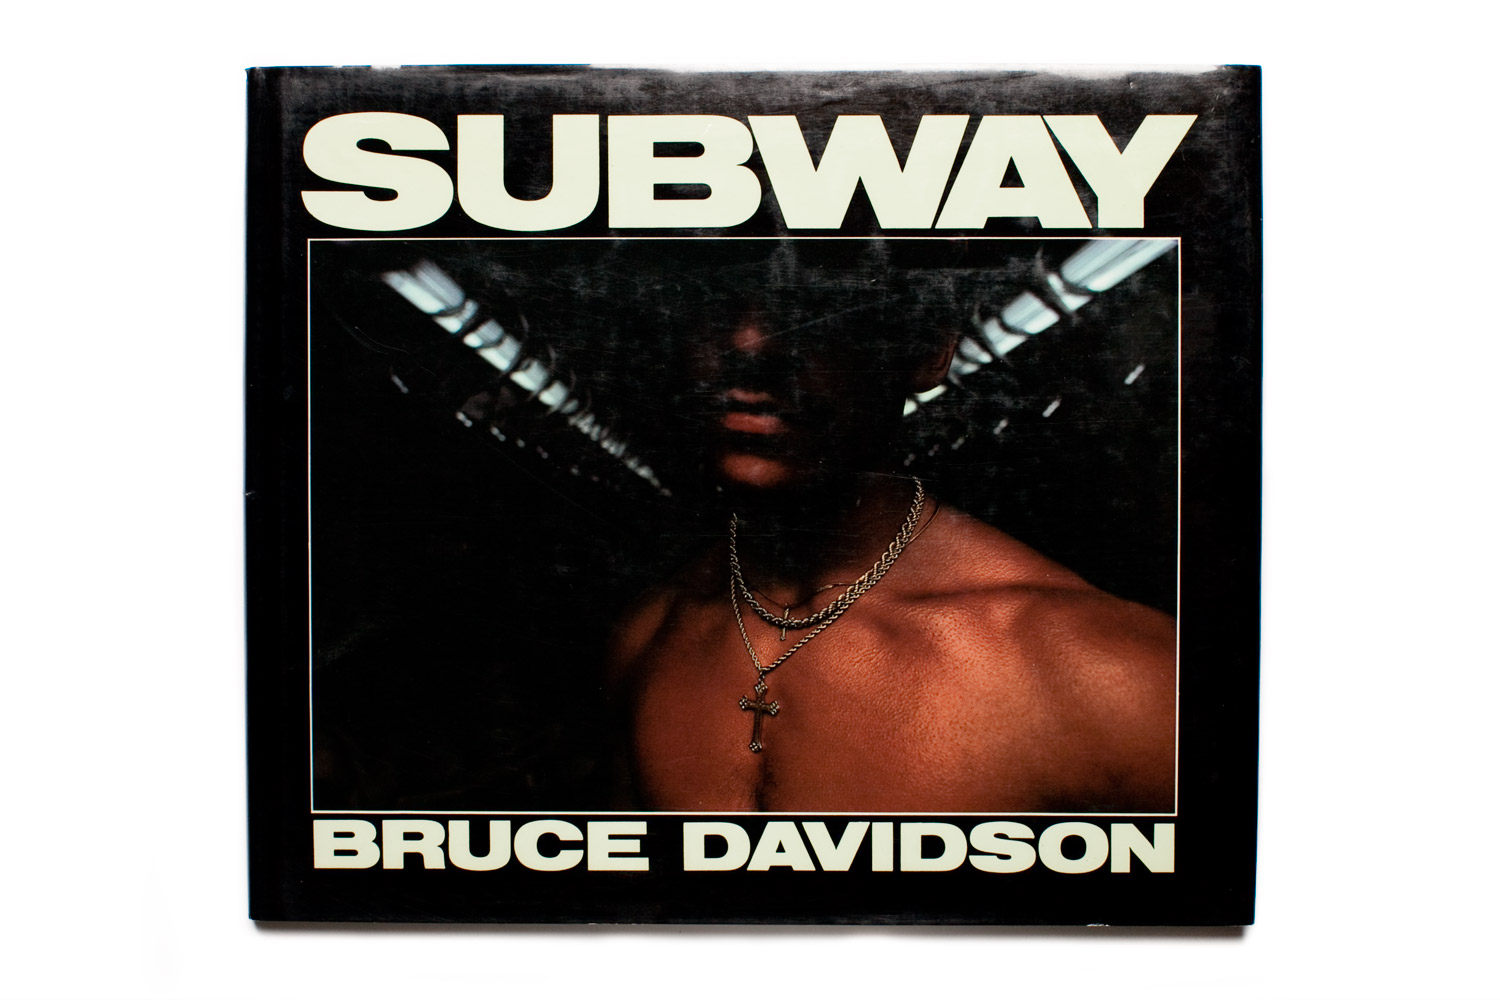 Subway by Bruce Davidson, originally printed in 1986.